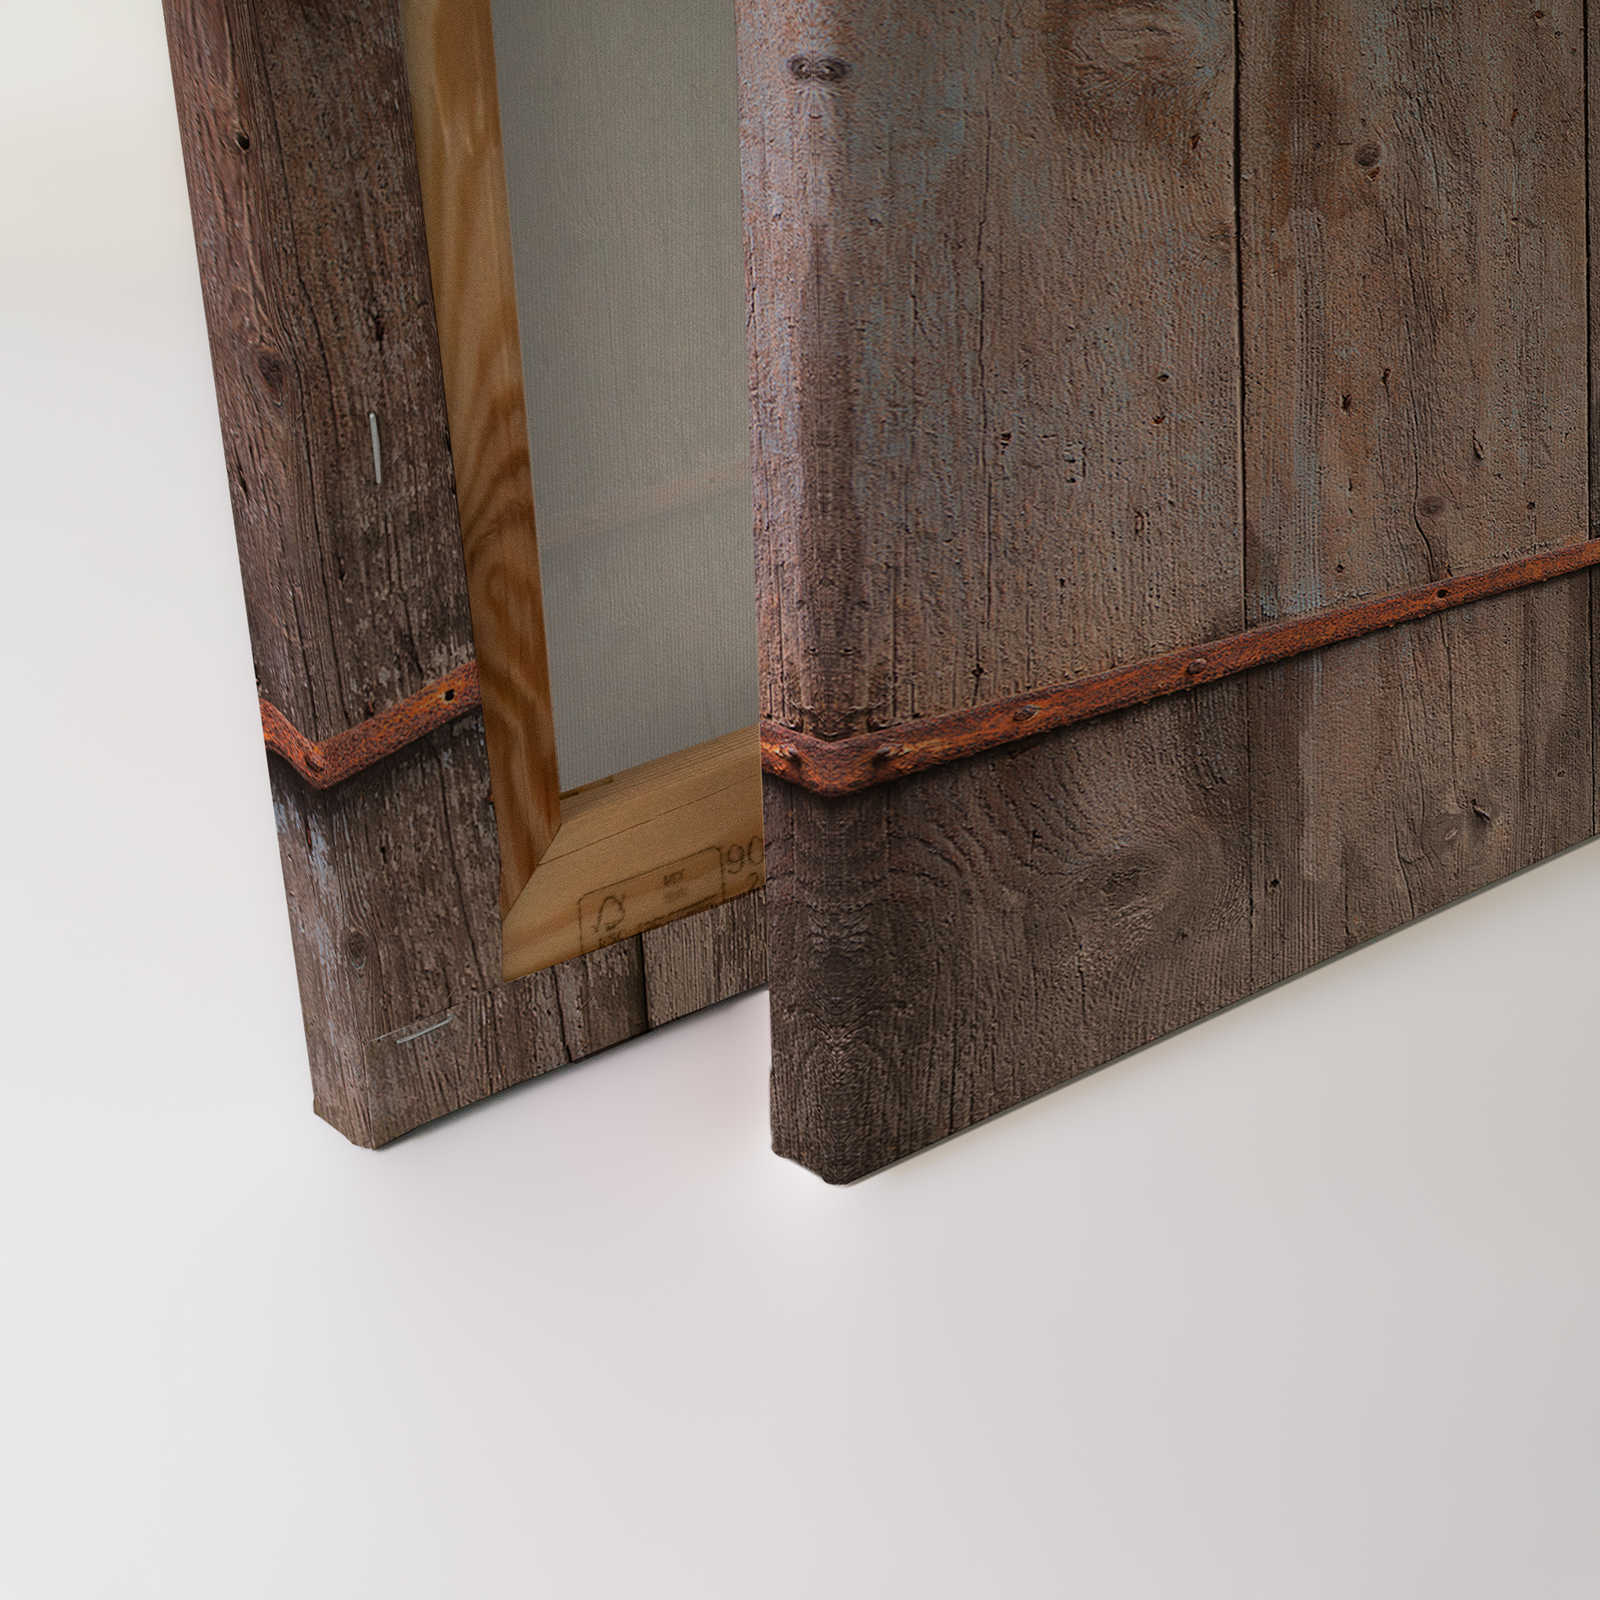             Holz Leinwandbild Scheunentor Bretteroptik im Used Look – 1,20 m x 0,80 m
        